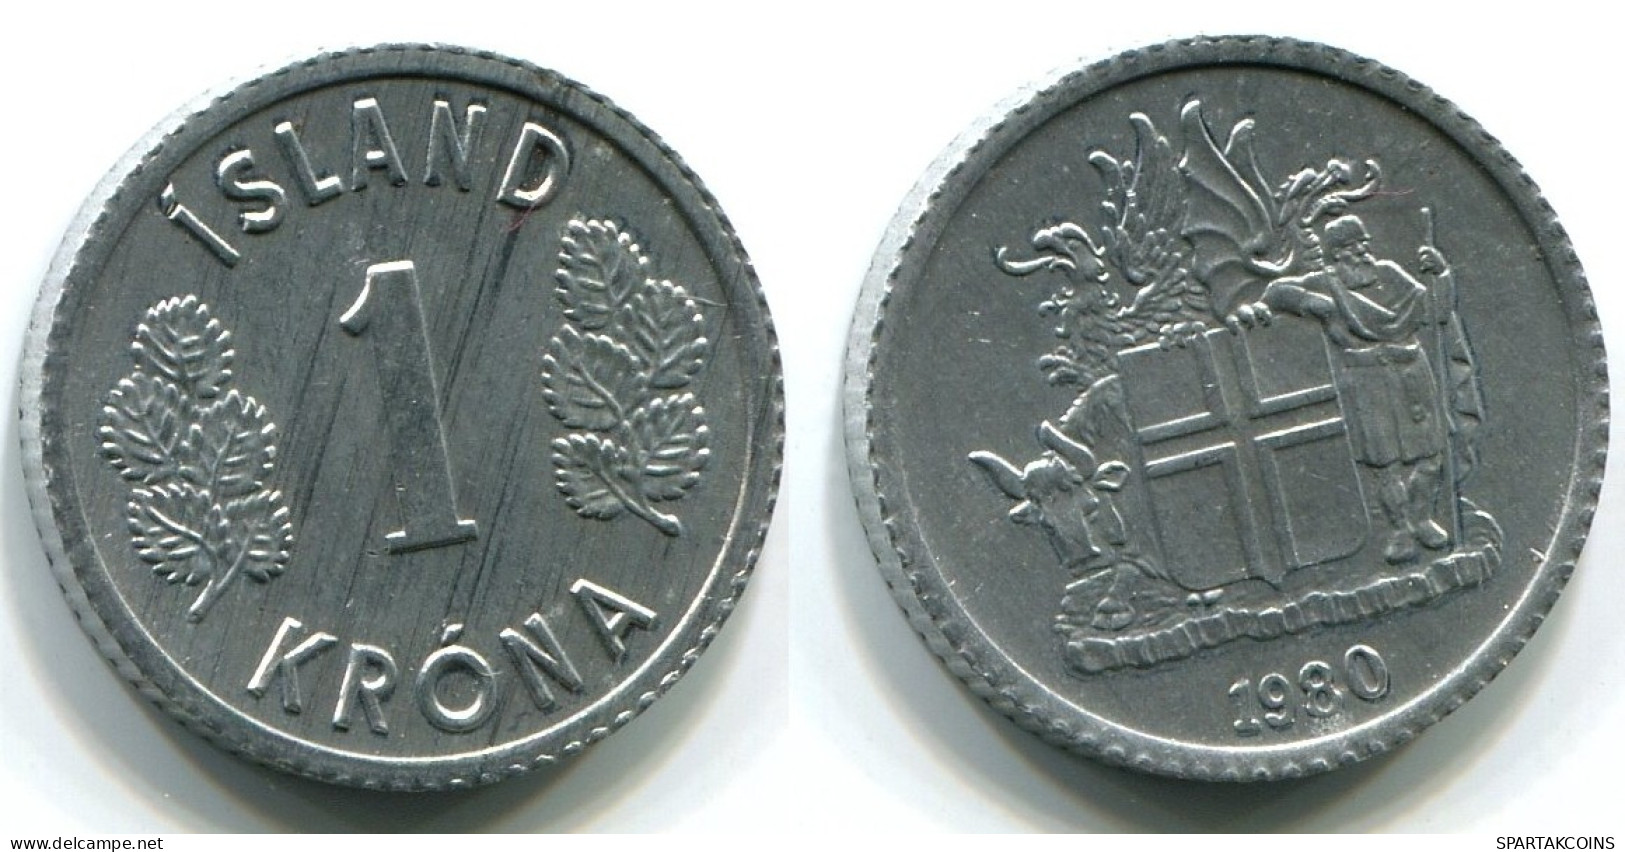 1 KRONA 1980 ICELAND UNC Coin #W10850.U.A - IJsland